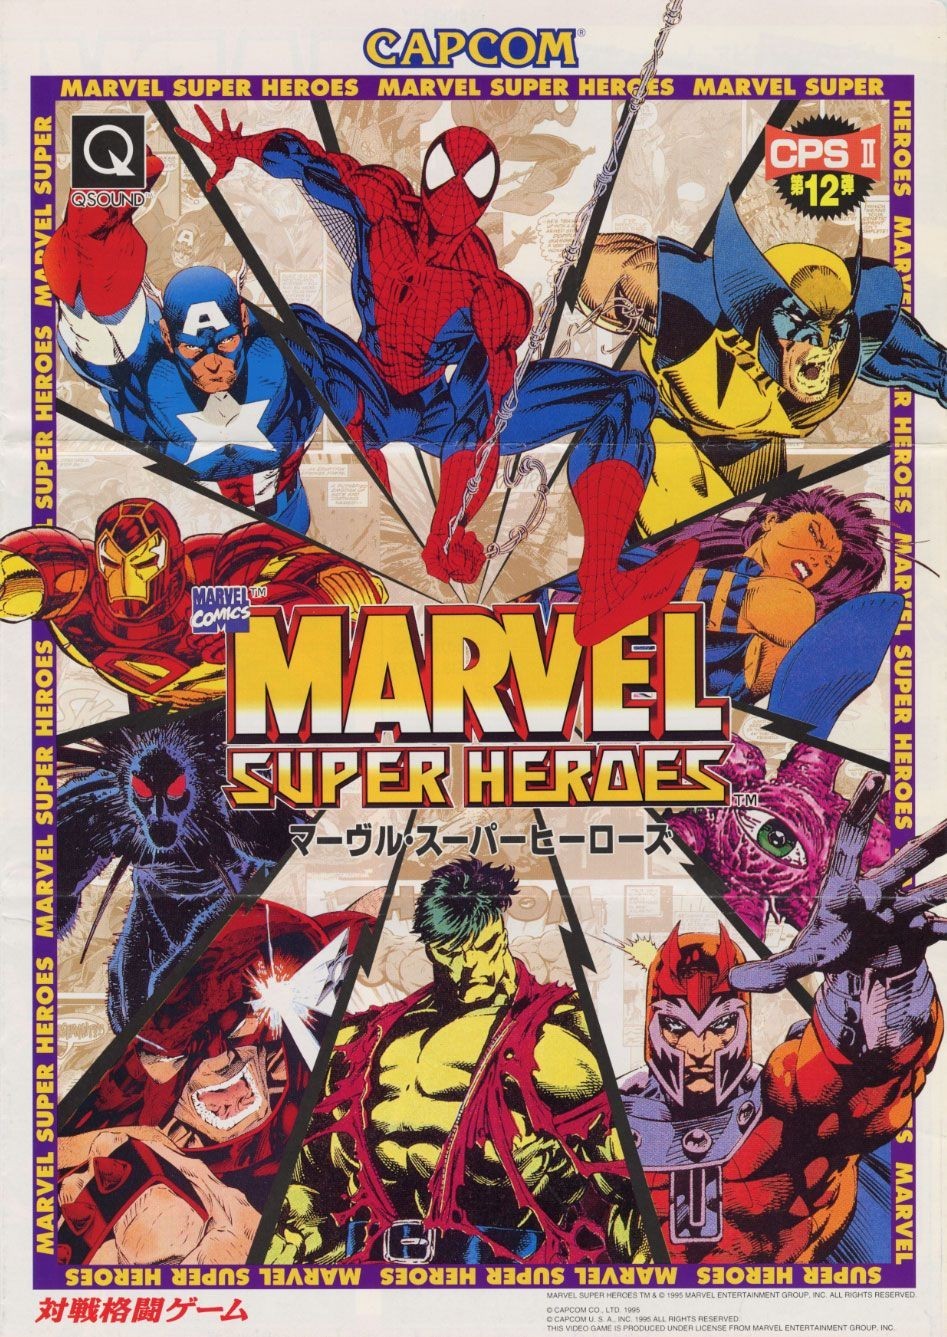 Capa do jogo Marvel Super Heroes